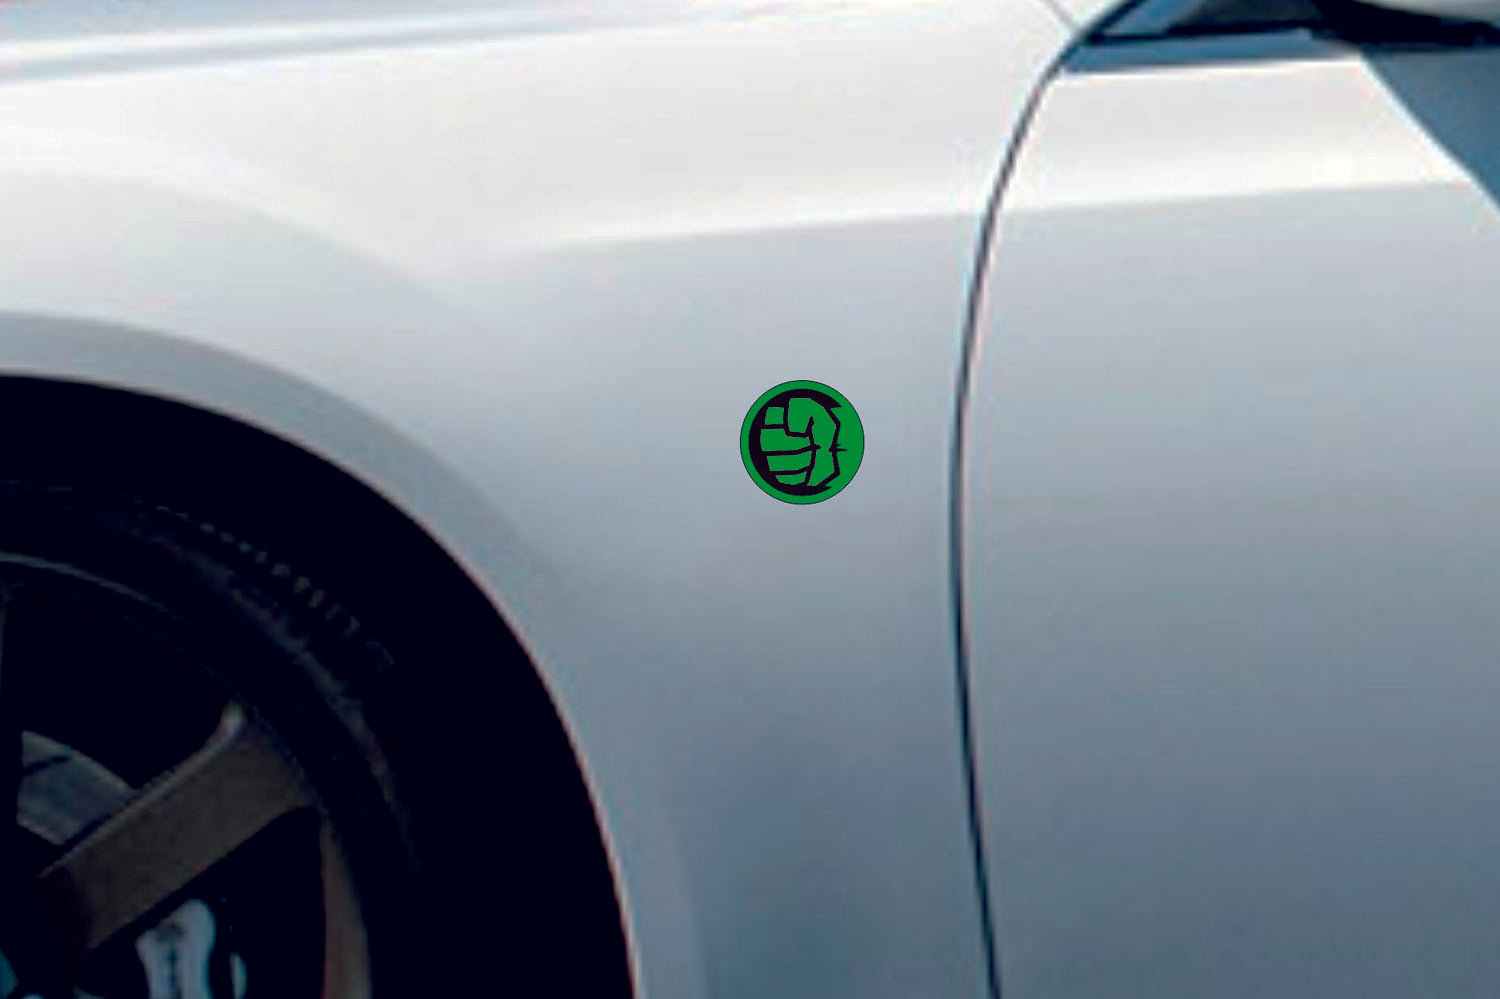 Car emblem badge for fenders with Hulk logo - decoinfabric